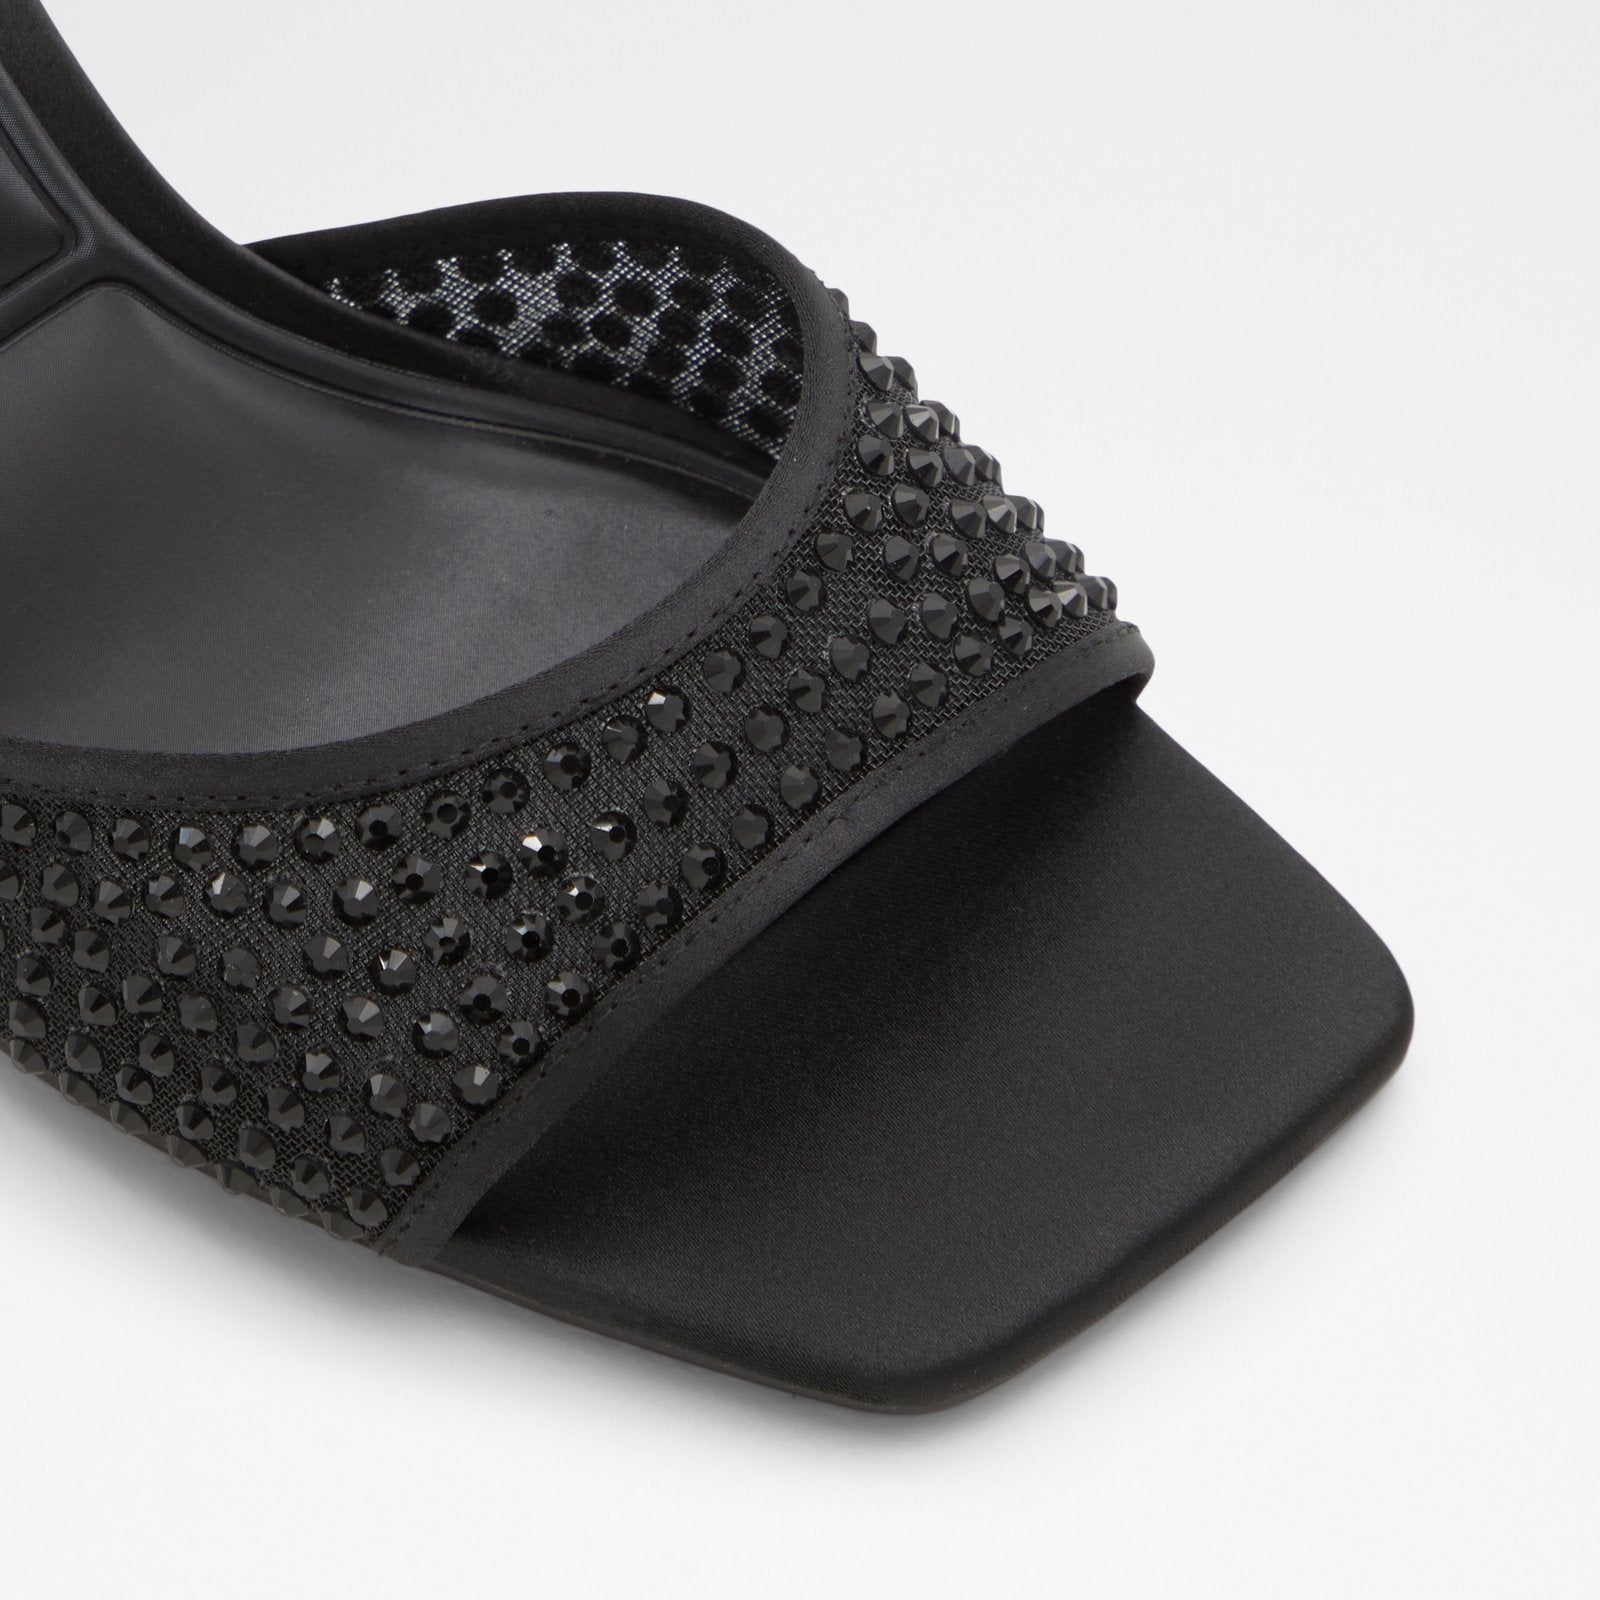 Agatha Women Shoes - Black - ALDO KSA